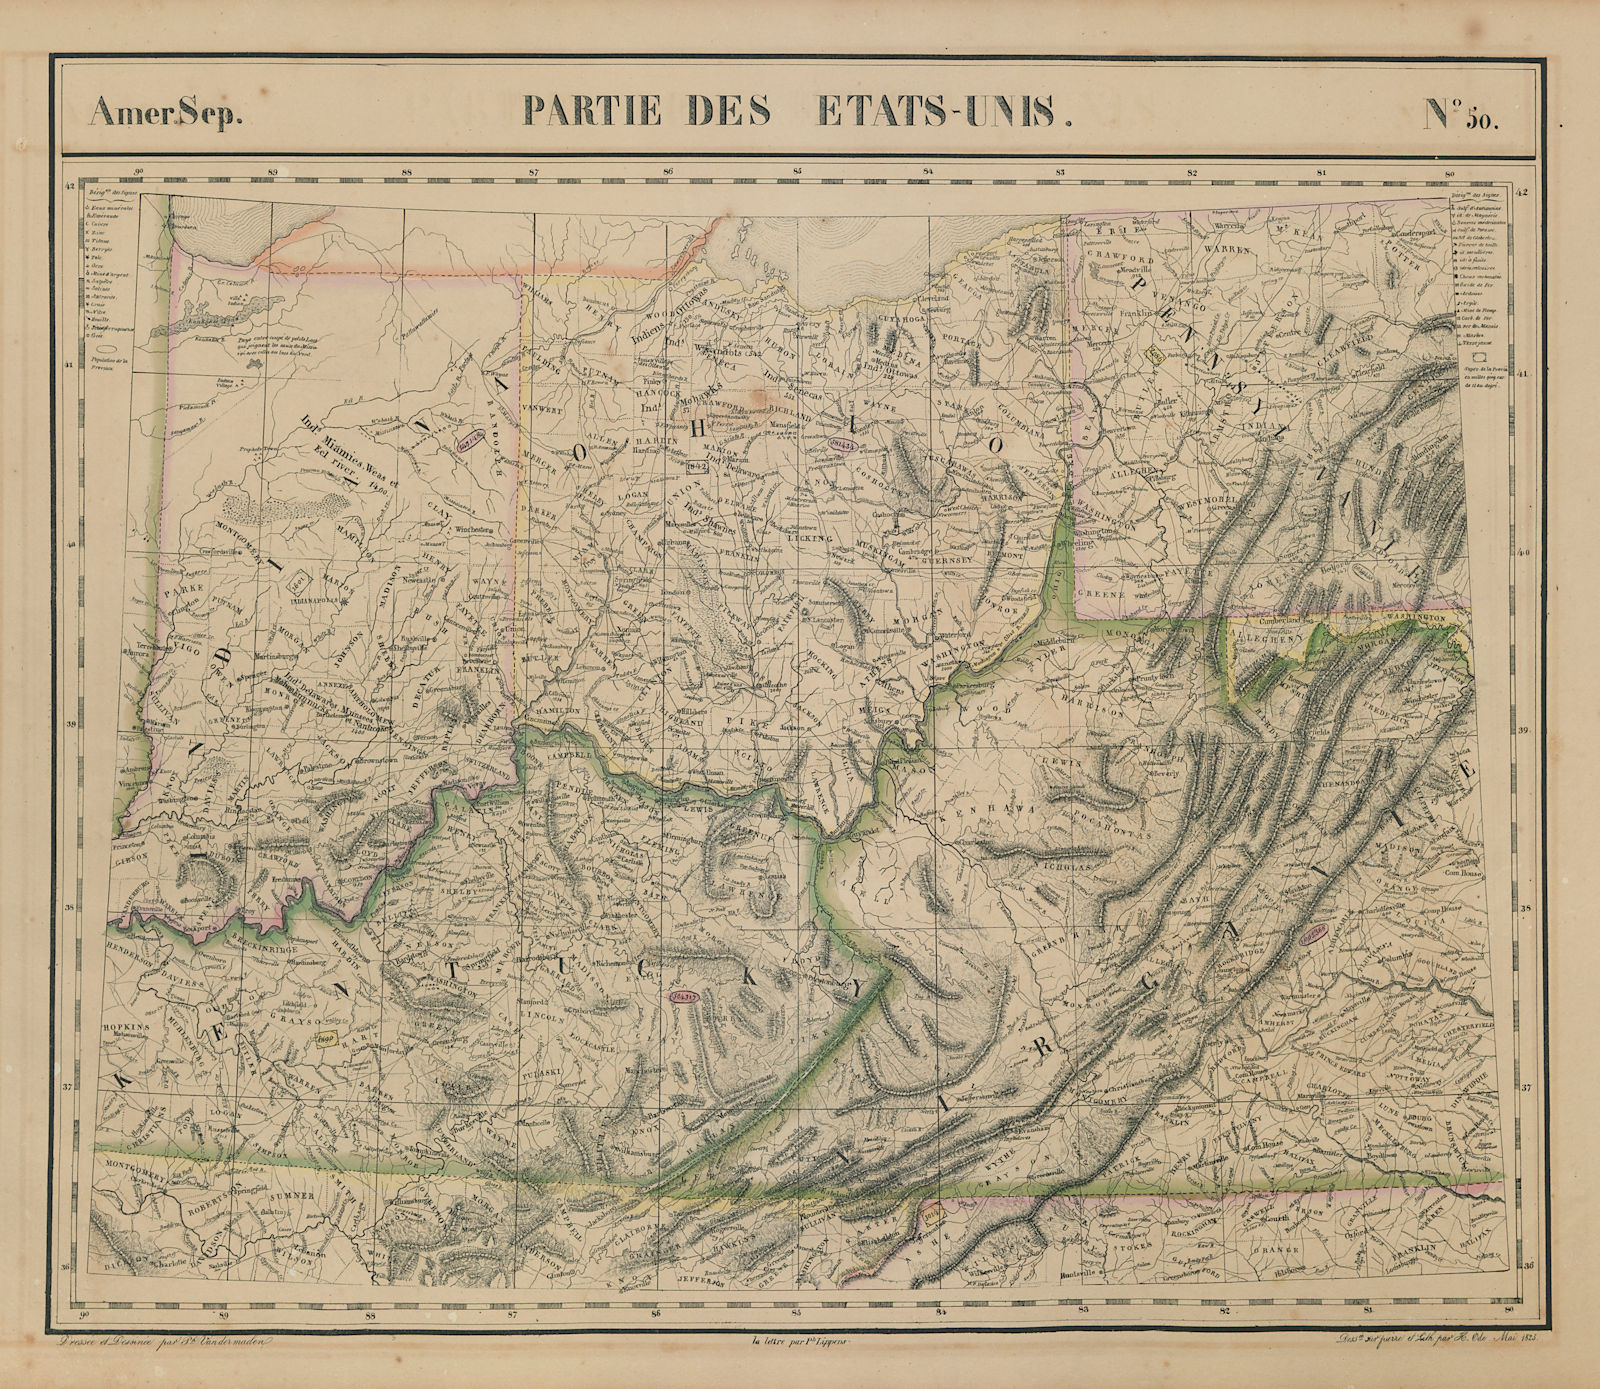 Associate Product Amér Sep Parties des États-Unis #50 Ohio KY WV VA IN PA. VANDERMAELEN 1827 map